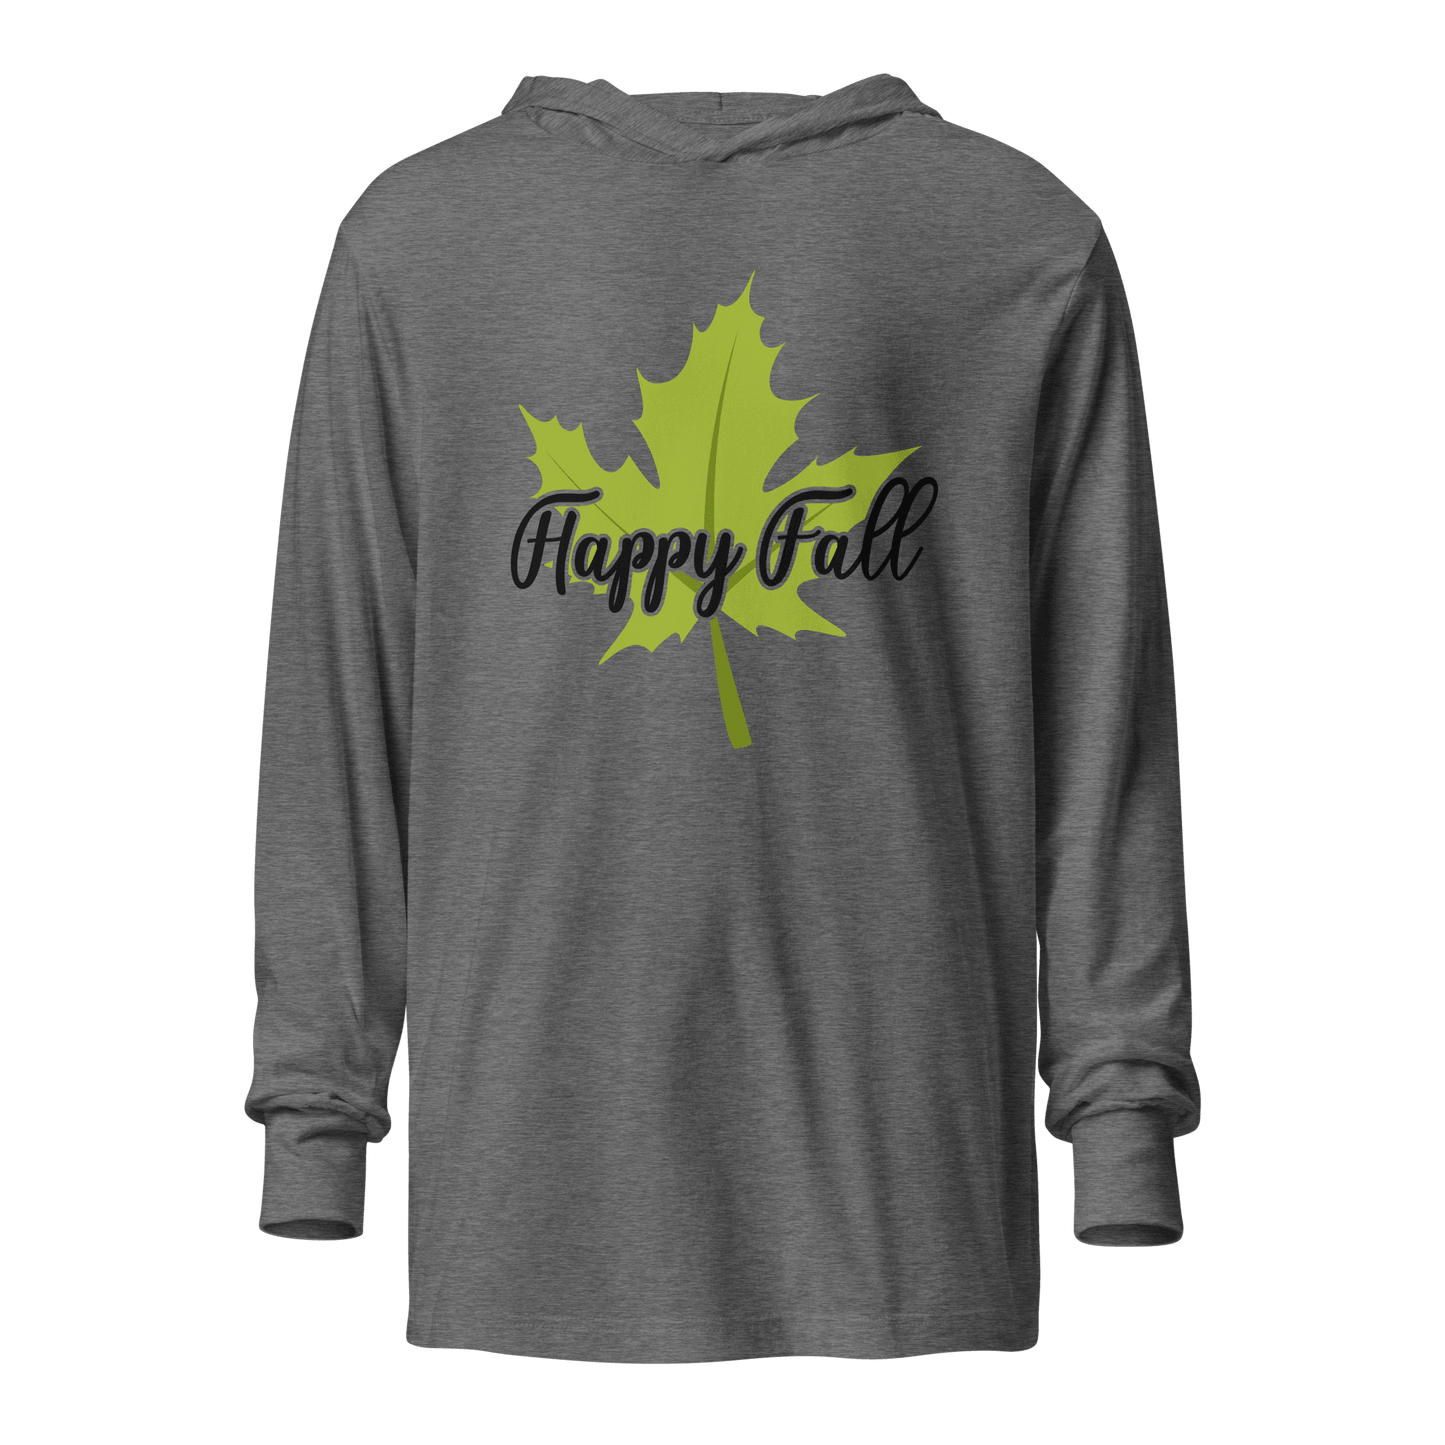 Happy Fall Hooded long-sleeve tee